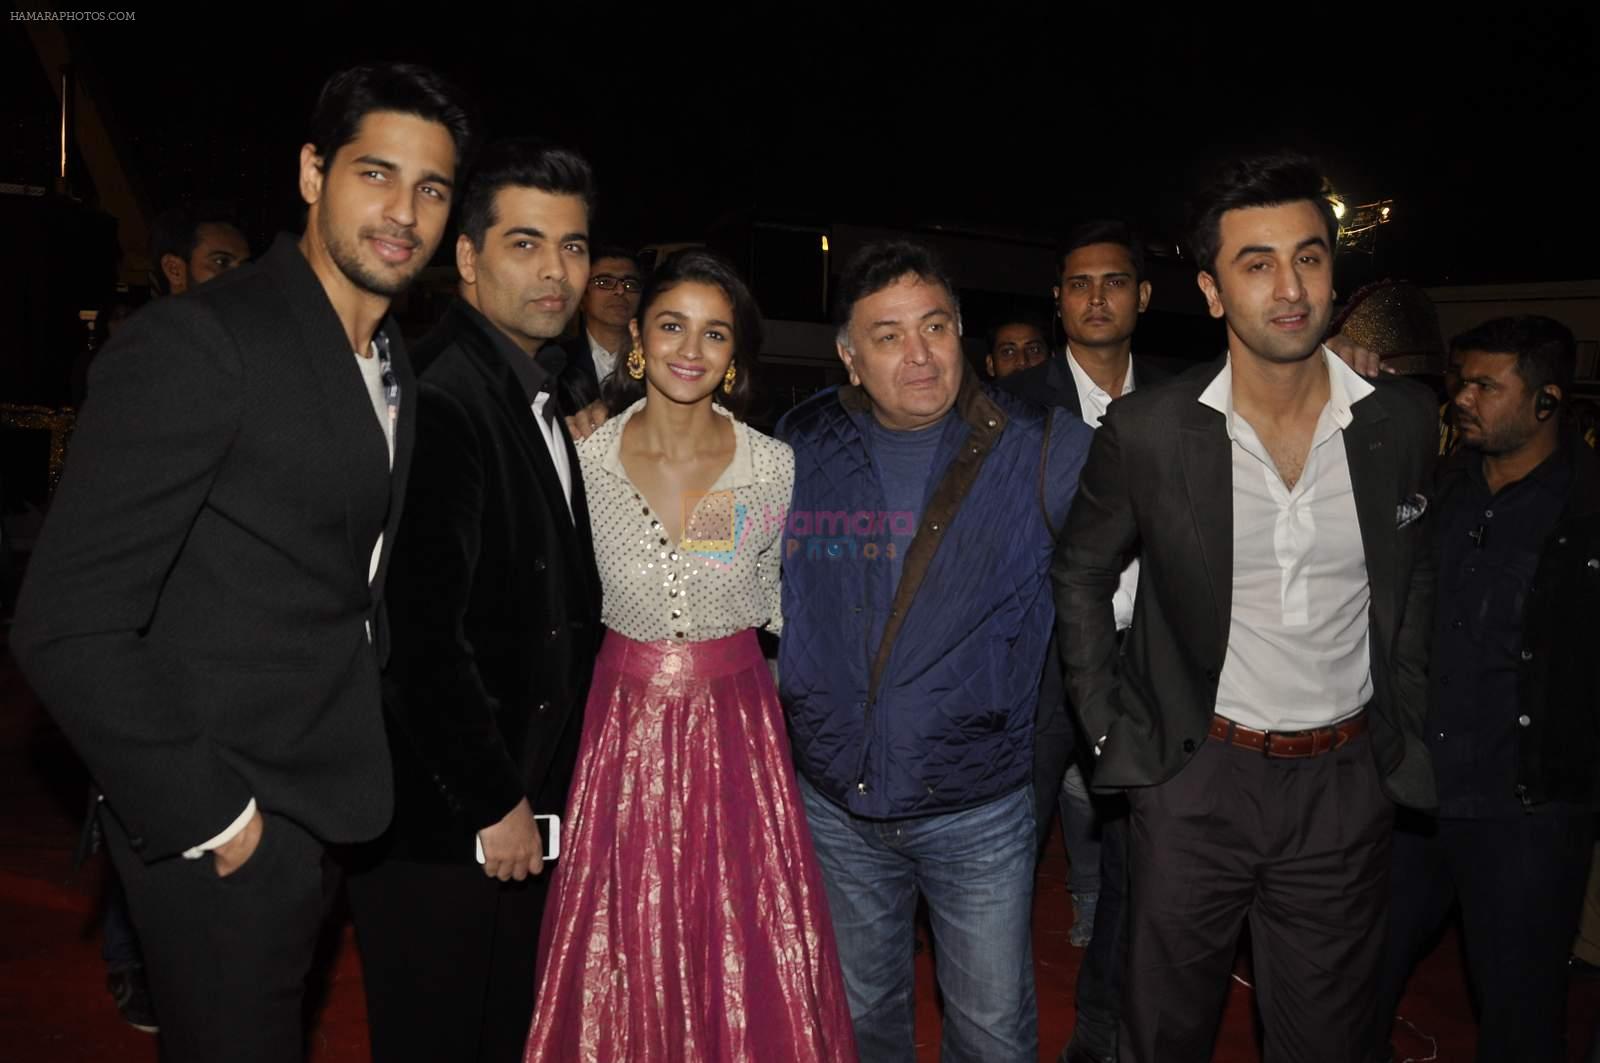 Sidharth Malhotra, Karan Johar, Ali Bhatt, Rishi Kapoor, Ranbir Kapoor at Umang police show on 19th Jan 2016